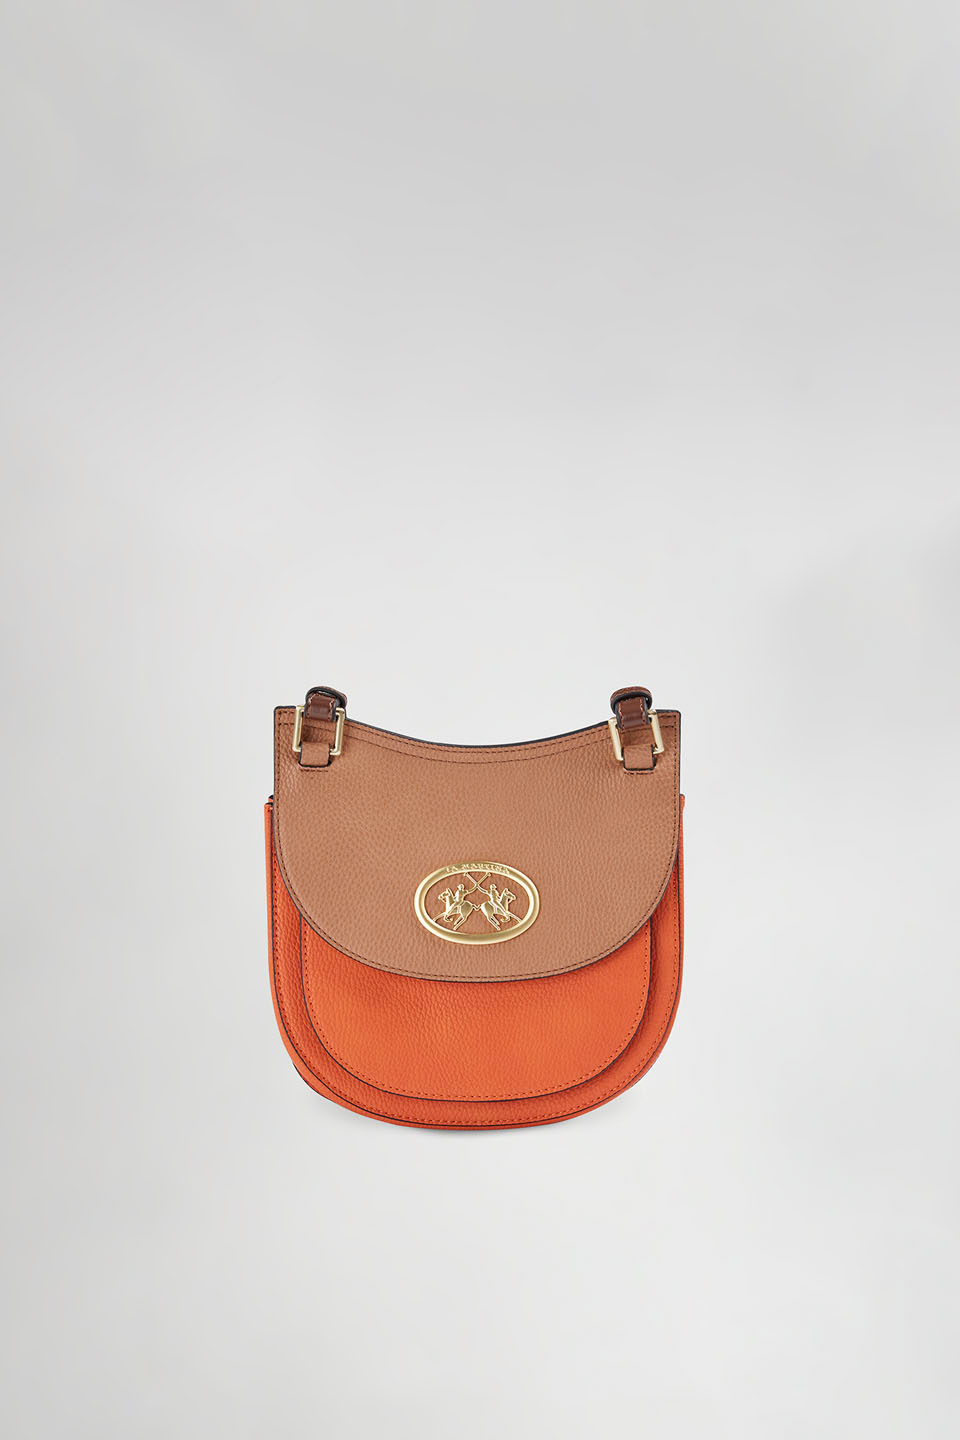 Buy Ladies Leather Handbags Online - Upto 80% Off | भारी छूट | Shopclues.com